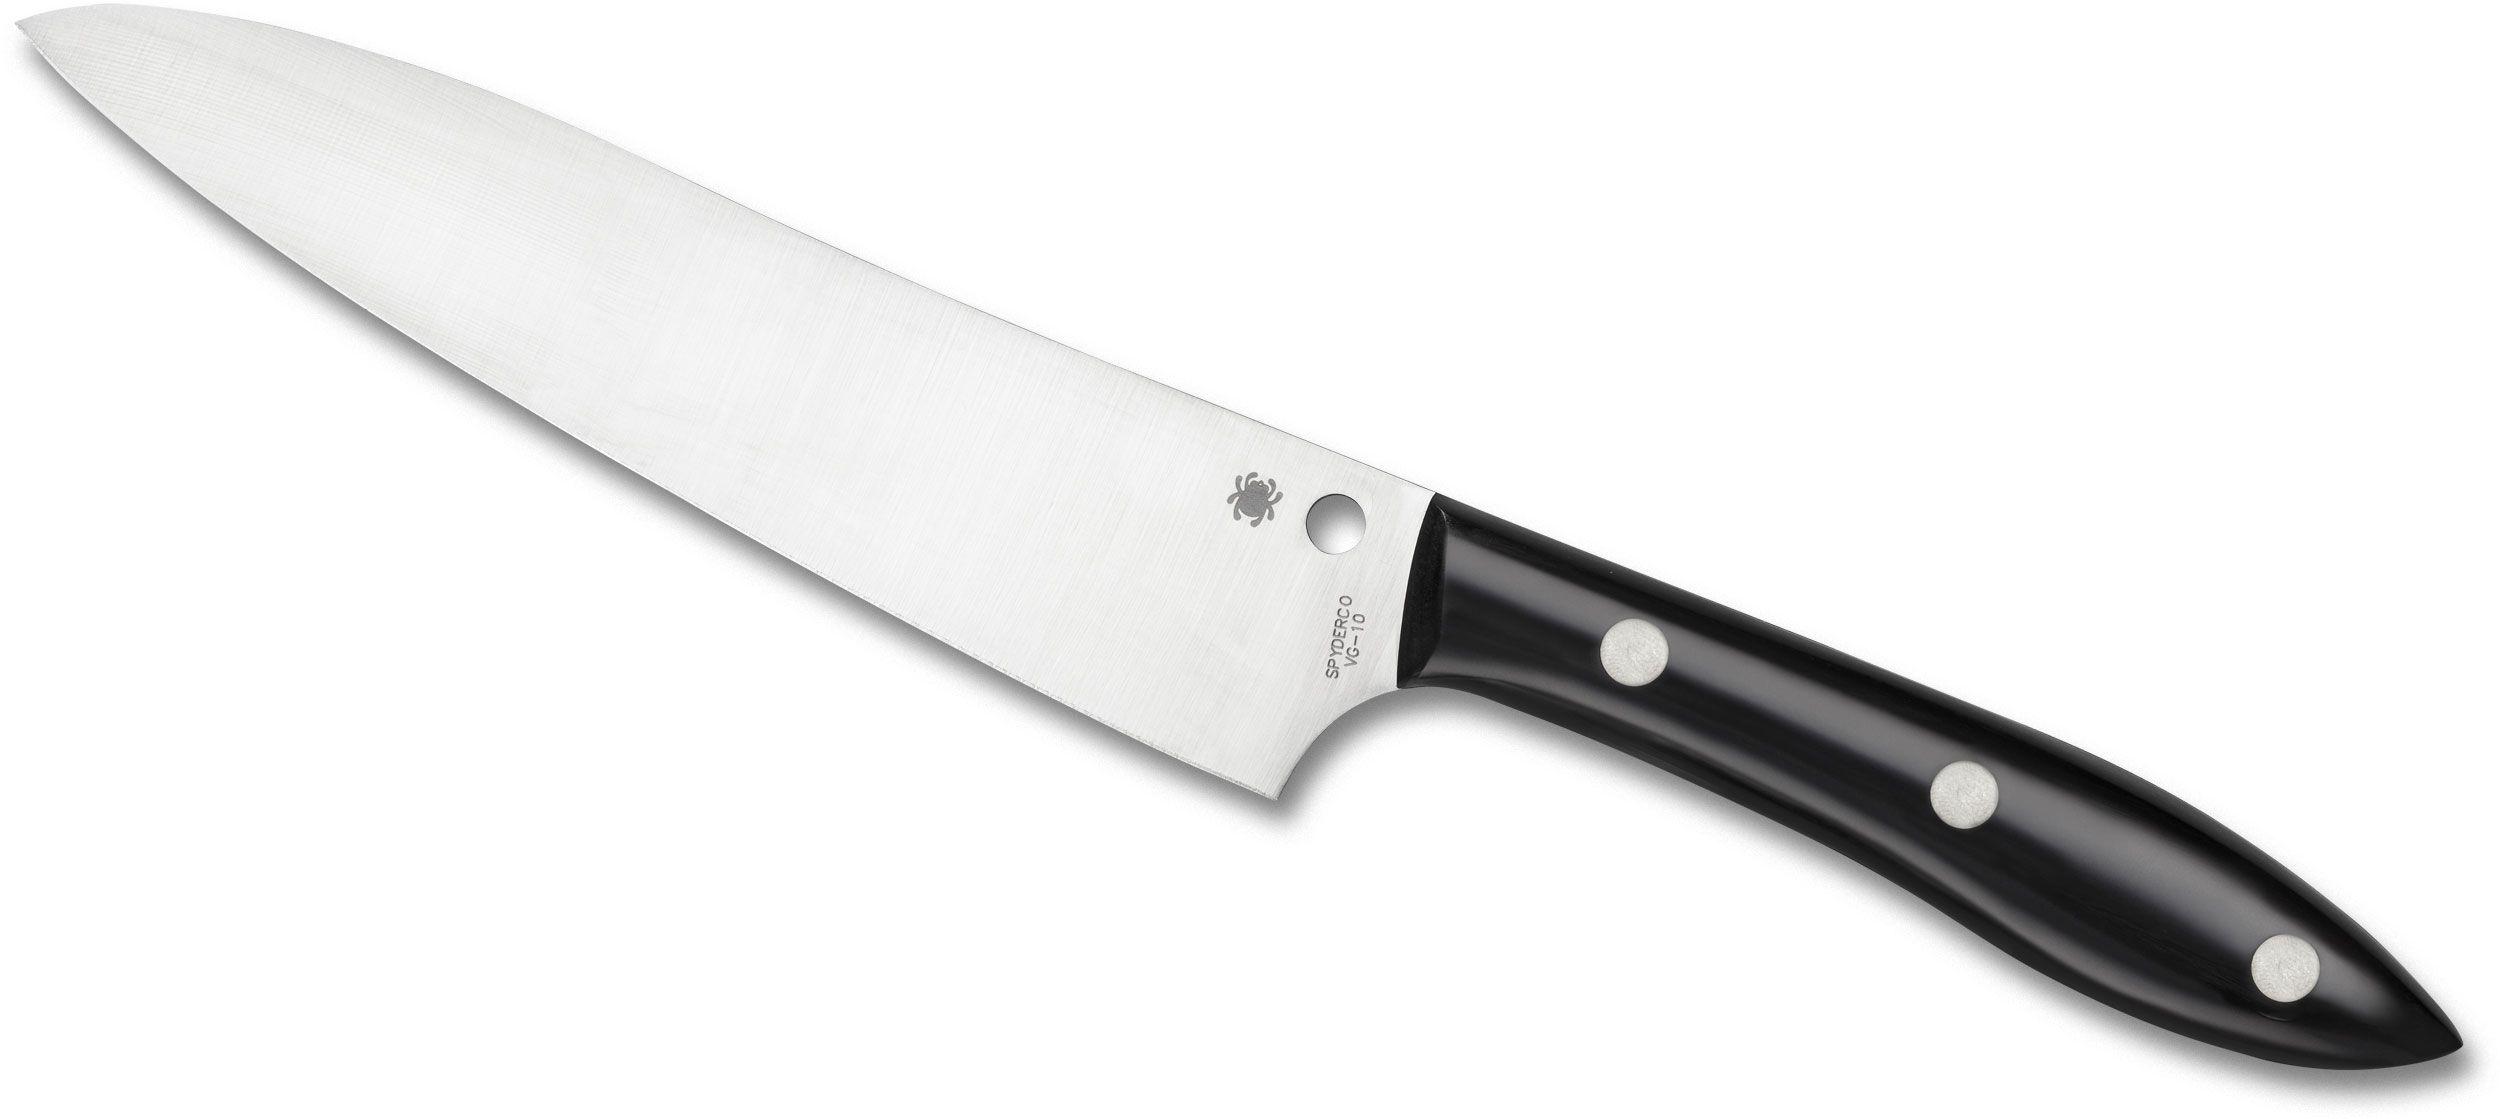 Spyderco Chef's Knife 7.13 VG10 Blade, Black Corian Handles - KnifeCenter  - K12P - Discontinued